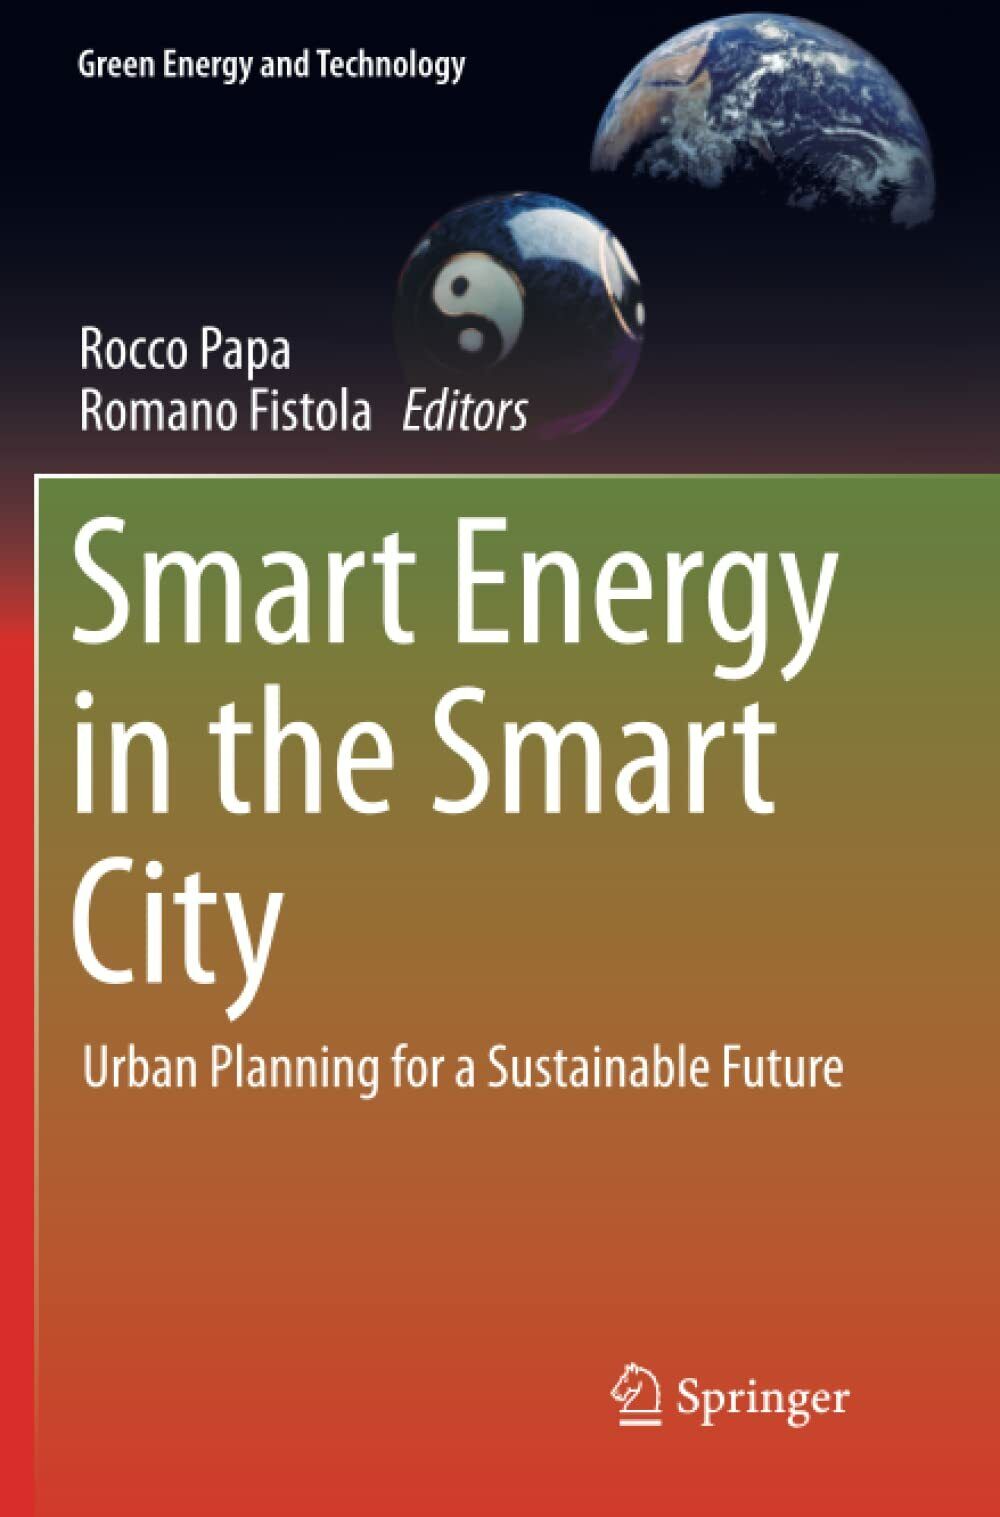 Smart Energy in the Smart City - Rocco Papa - Springer, 2018 libro usato